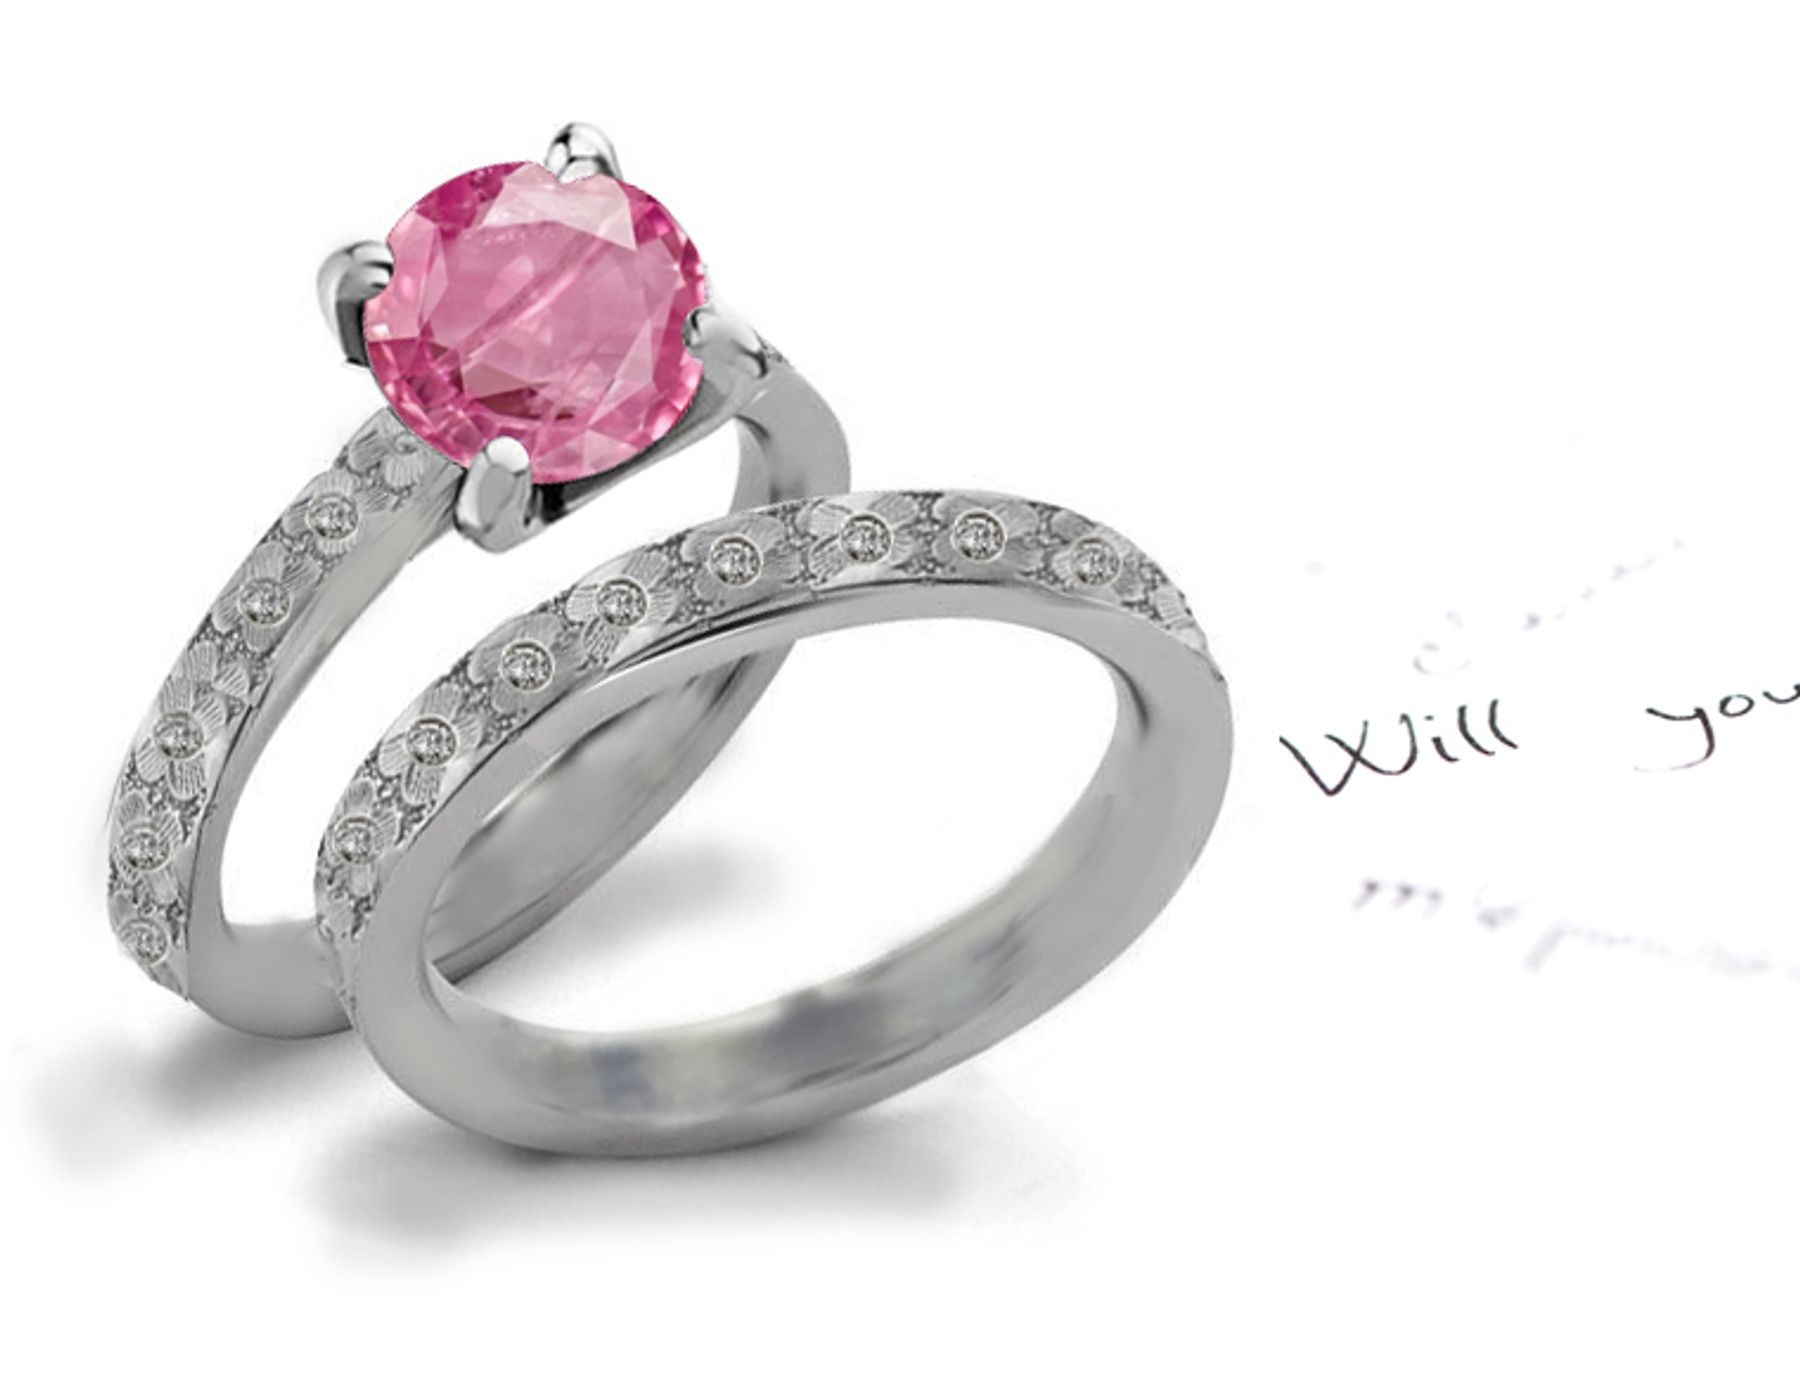 Stylish: Antique Hand Engraved Lively Pink Sapphire Diamond Designer Engagement Ring